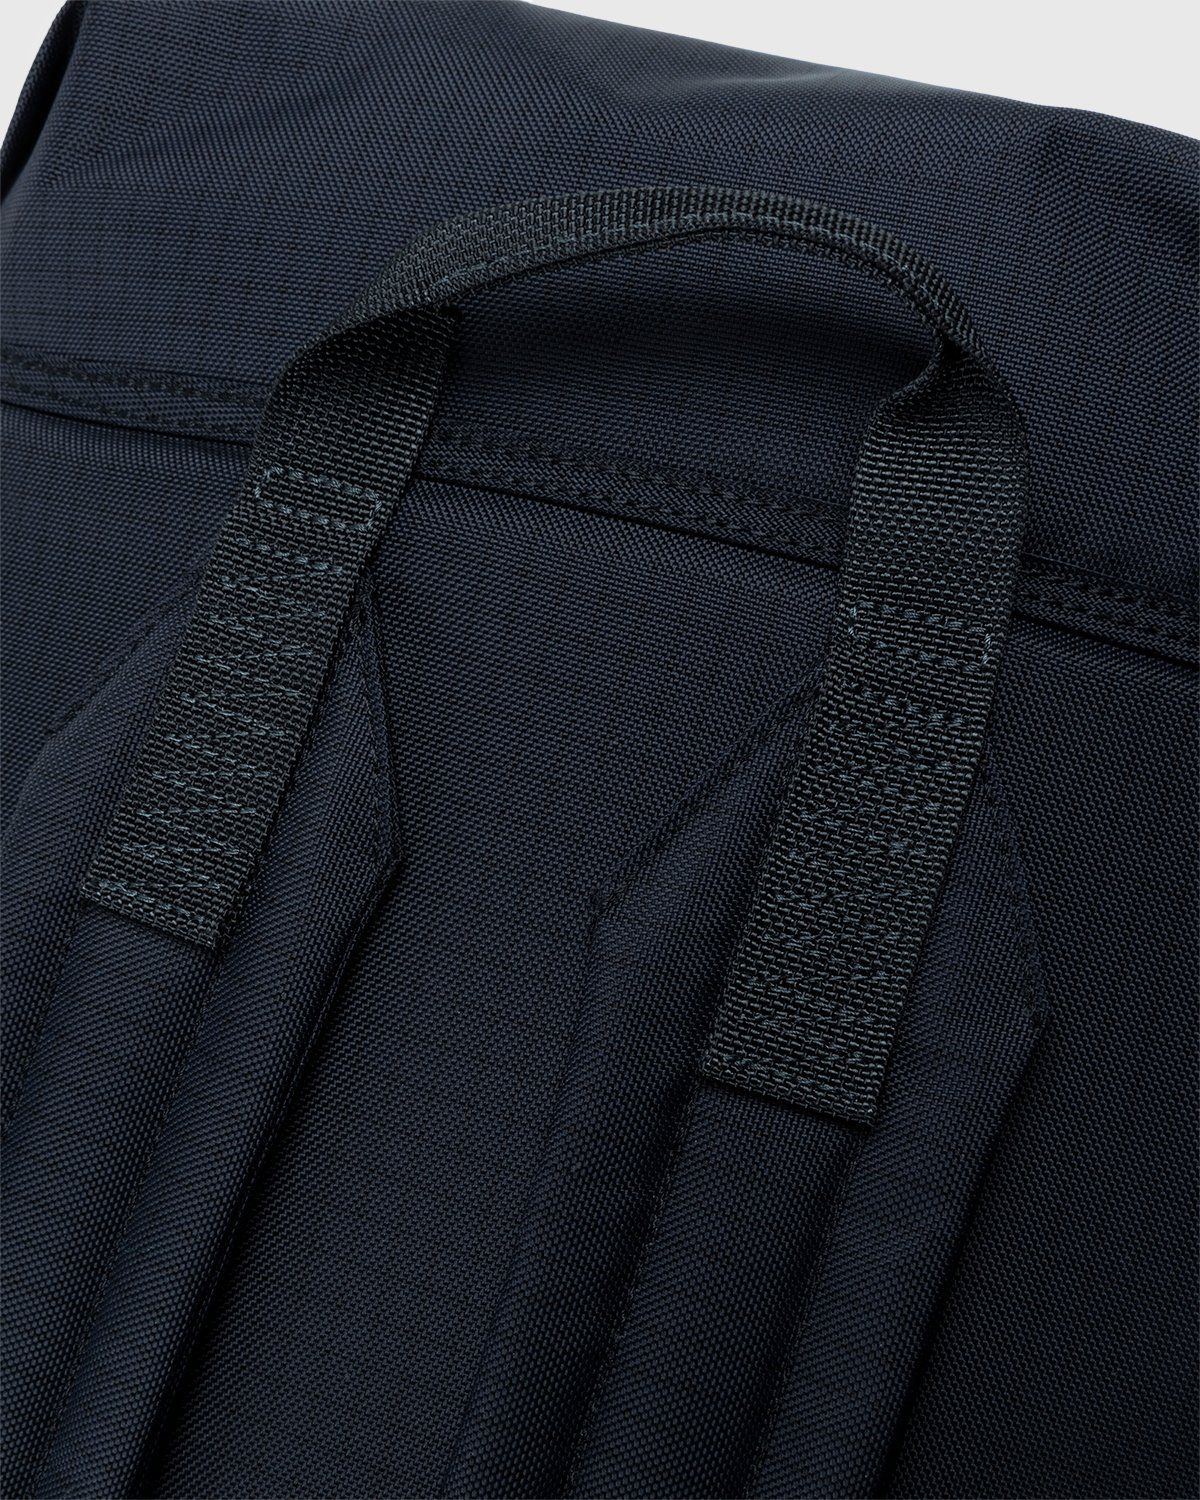 Acne Studios – Large Ripstop Backpack Black - Backpacks - Black - Image 6